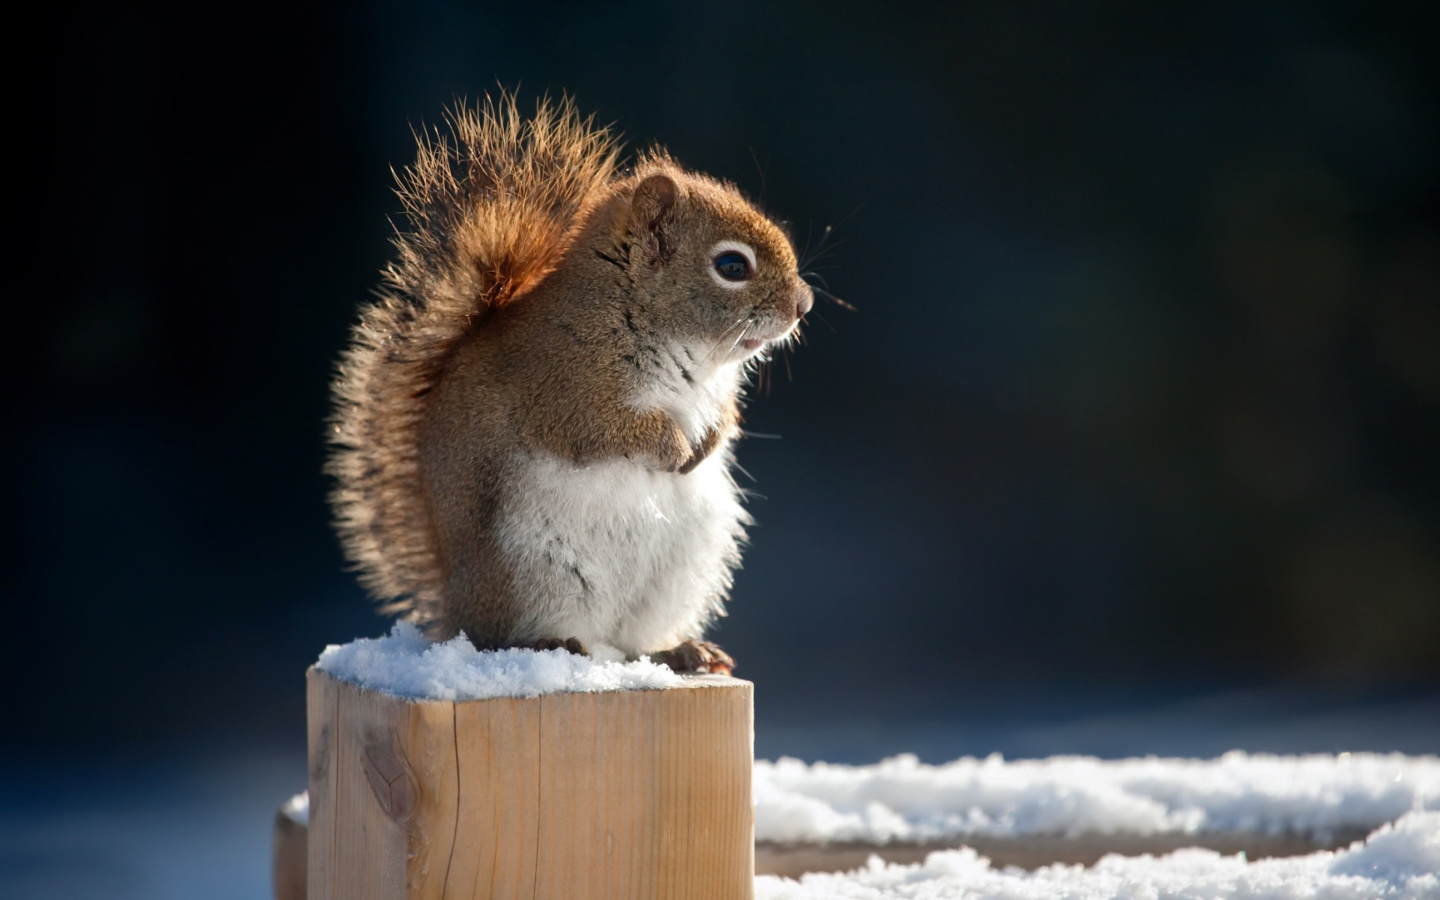 Cute squirrel in winter wallpaper 1440x900